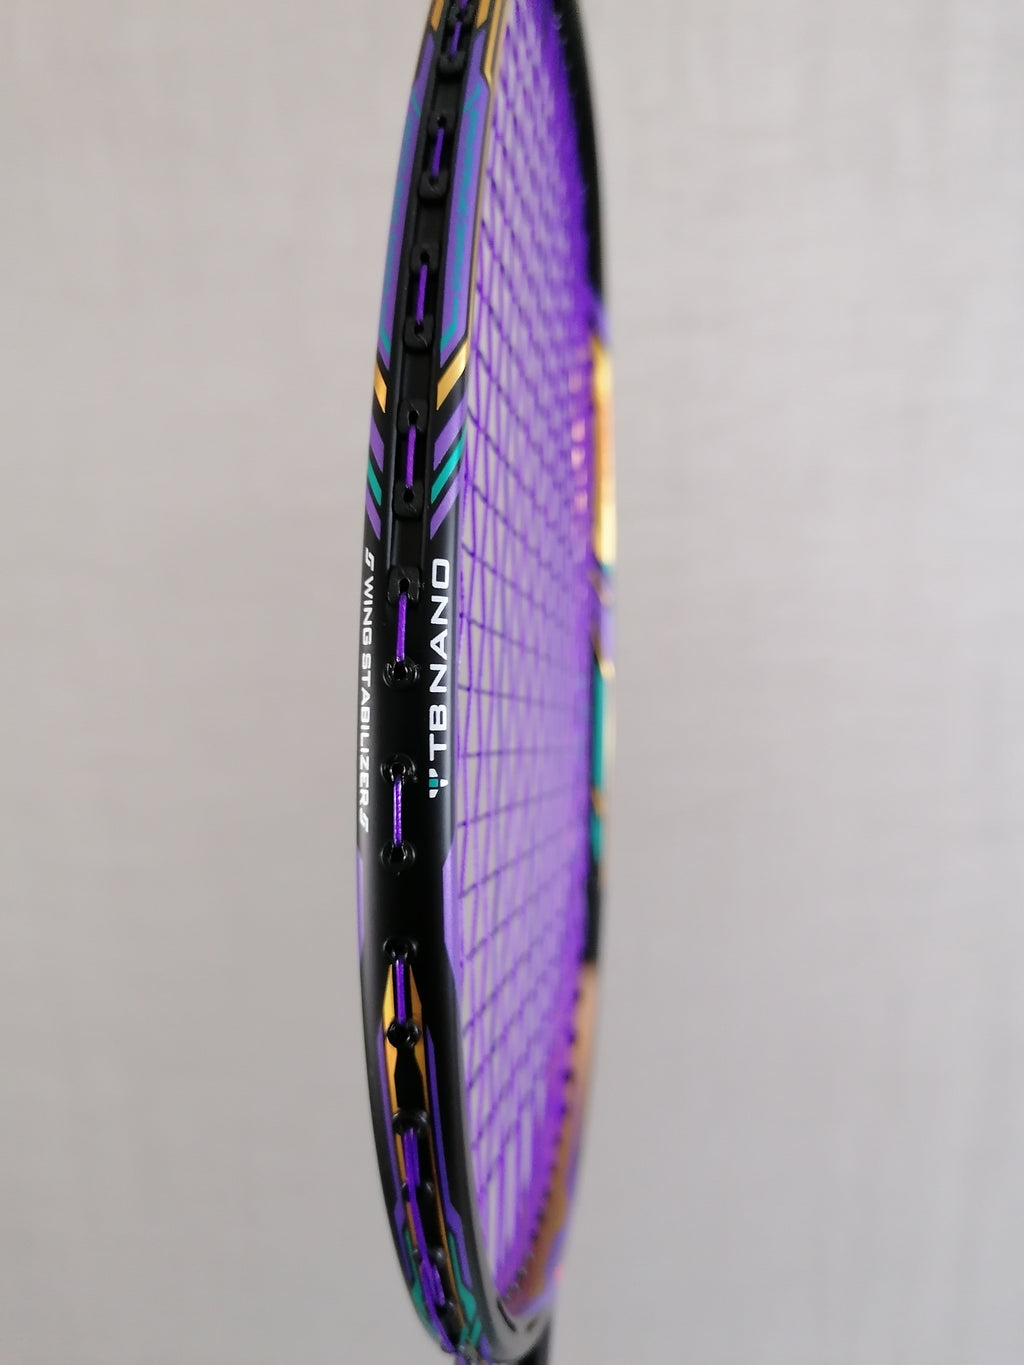 Li-Ning Aeronaut 9000 Instinct Badminton Racket - badminton racket review